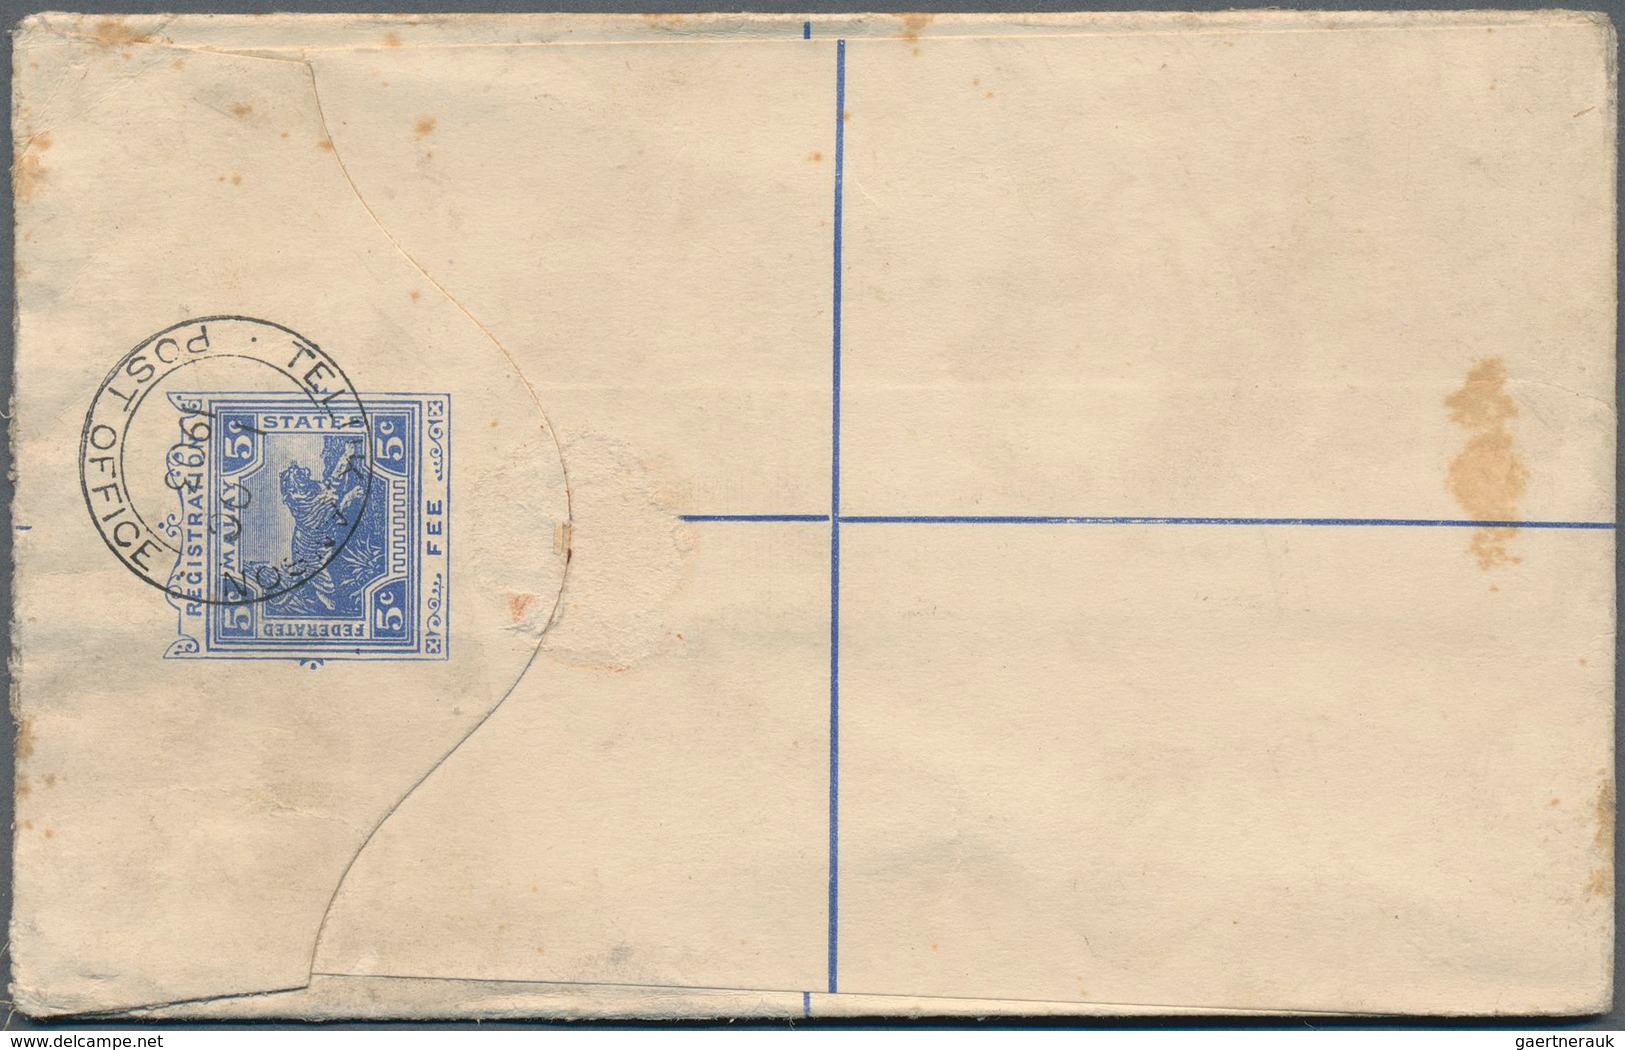 Malaiische Staaten - Perak: 1903 Fed. Malay States Postal Stationery Registered Envelope 5c. Used Fr - Perak